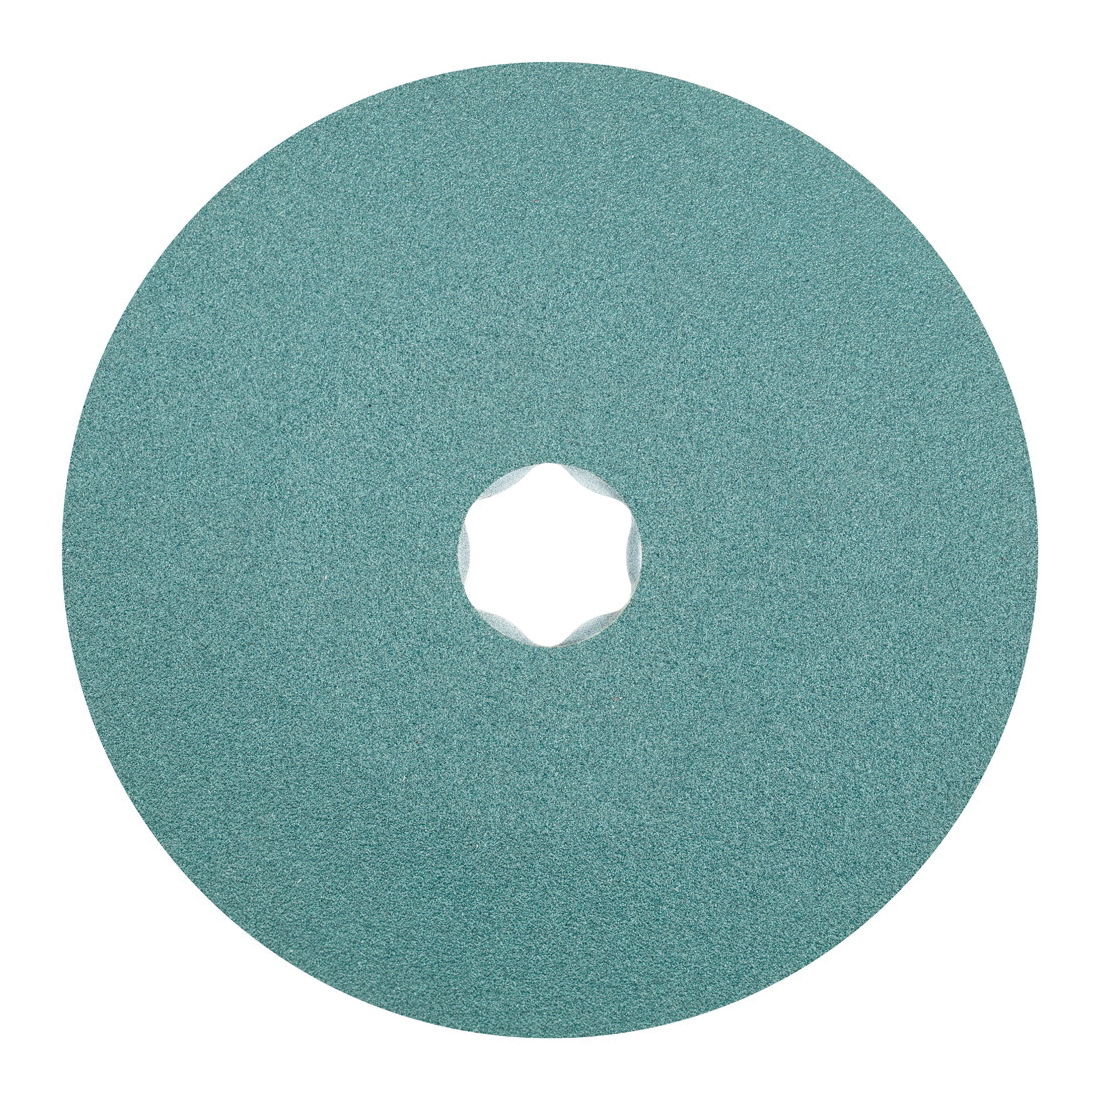 PFERD COMBICLICK® 40143 Coated Abrasive Disc, 5 in Dia, 120 Grit, Zirconia Alumina Abrasive